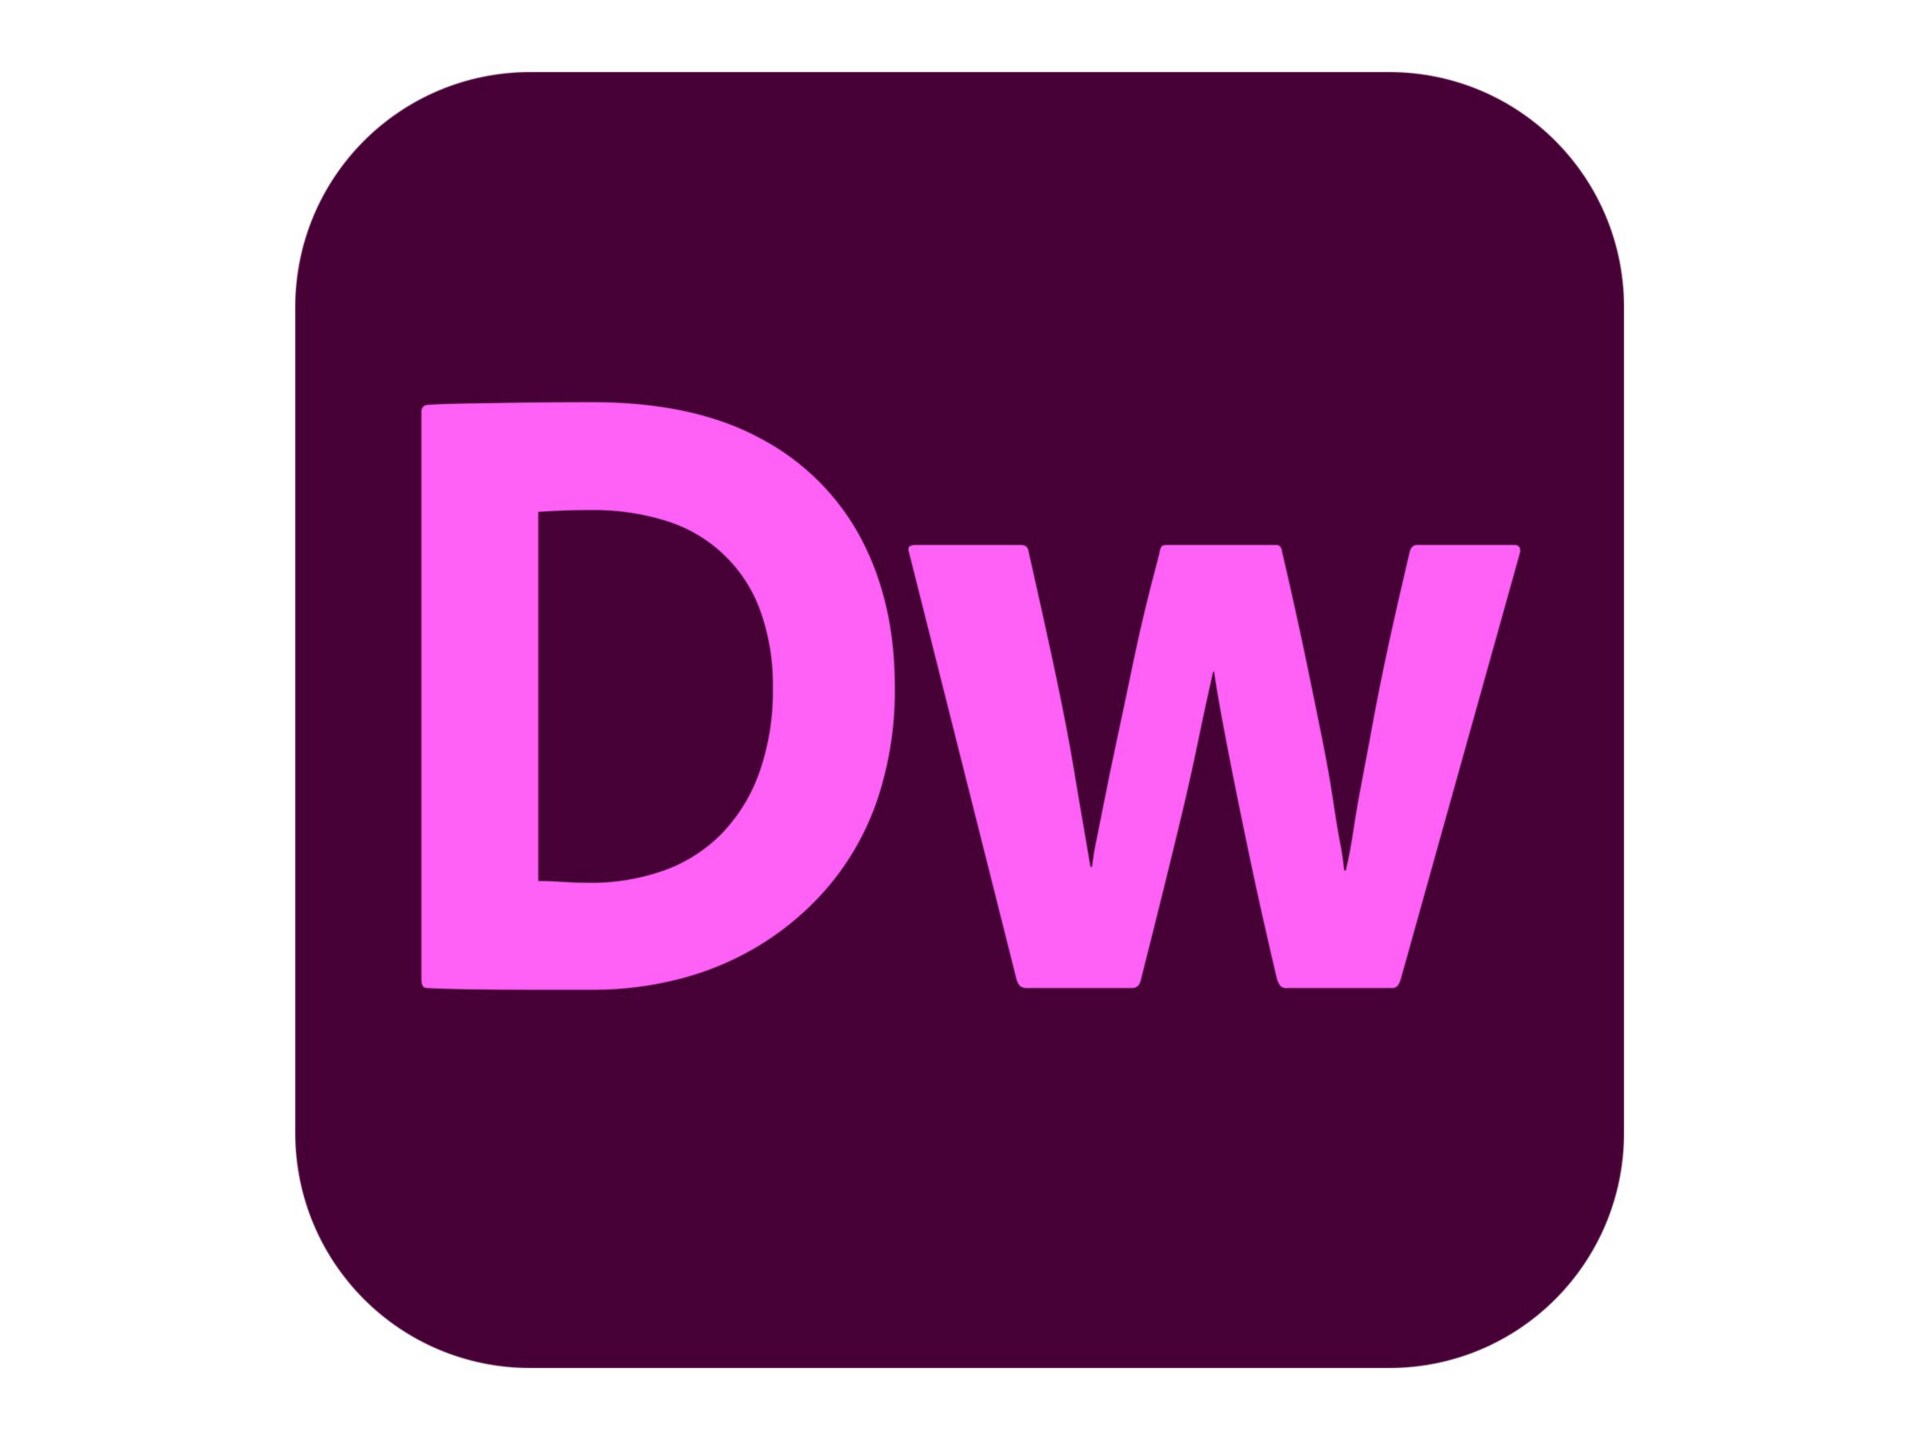 Adobe Dreamweaver CC - Team Licensing Subscription New (6 months) - 1 user